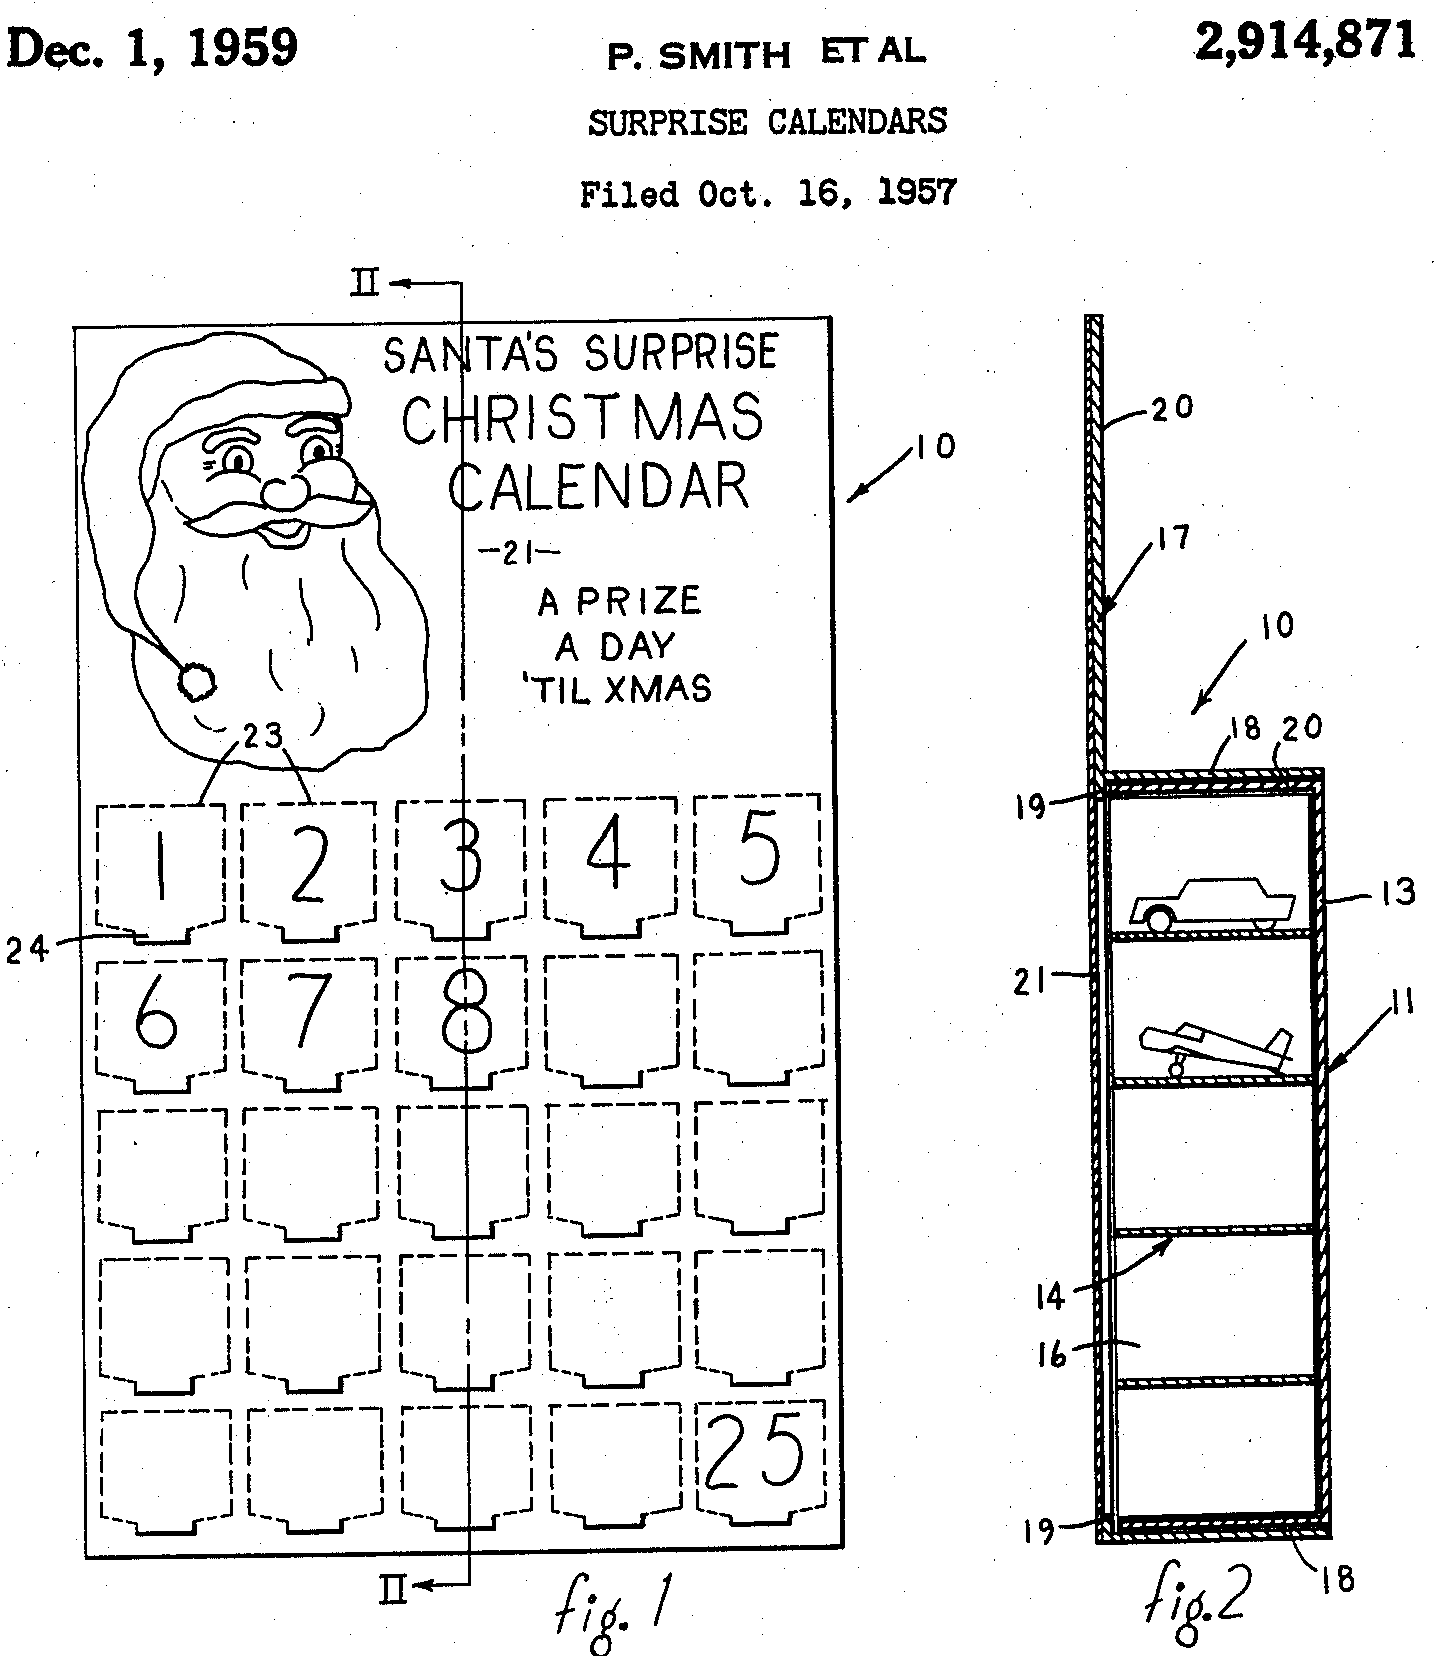 patent for Suprise calendars Santa's surprise Christmas calendar aka advent calendar